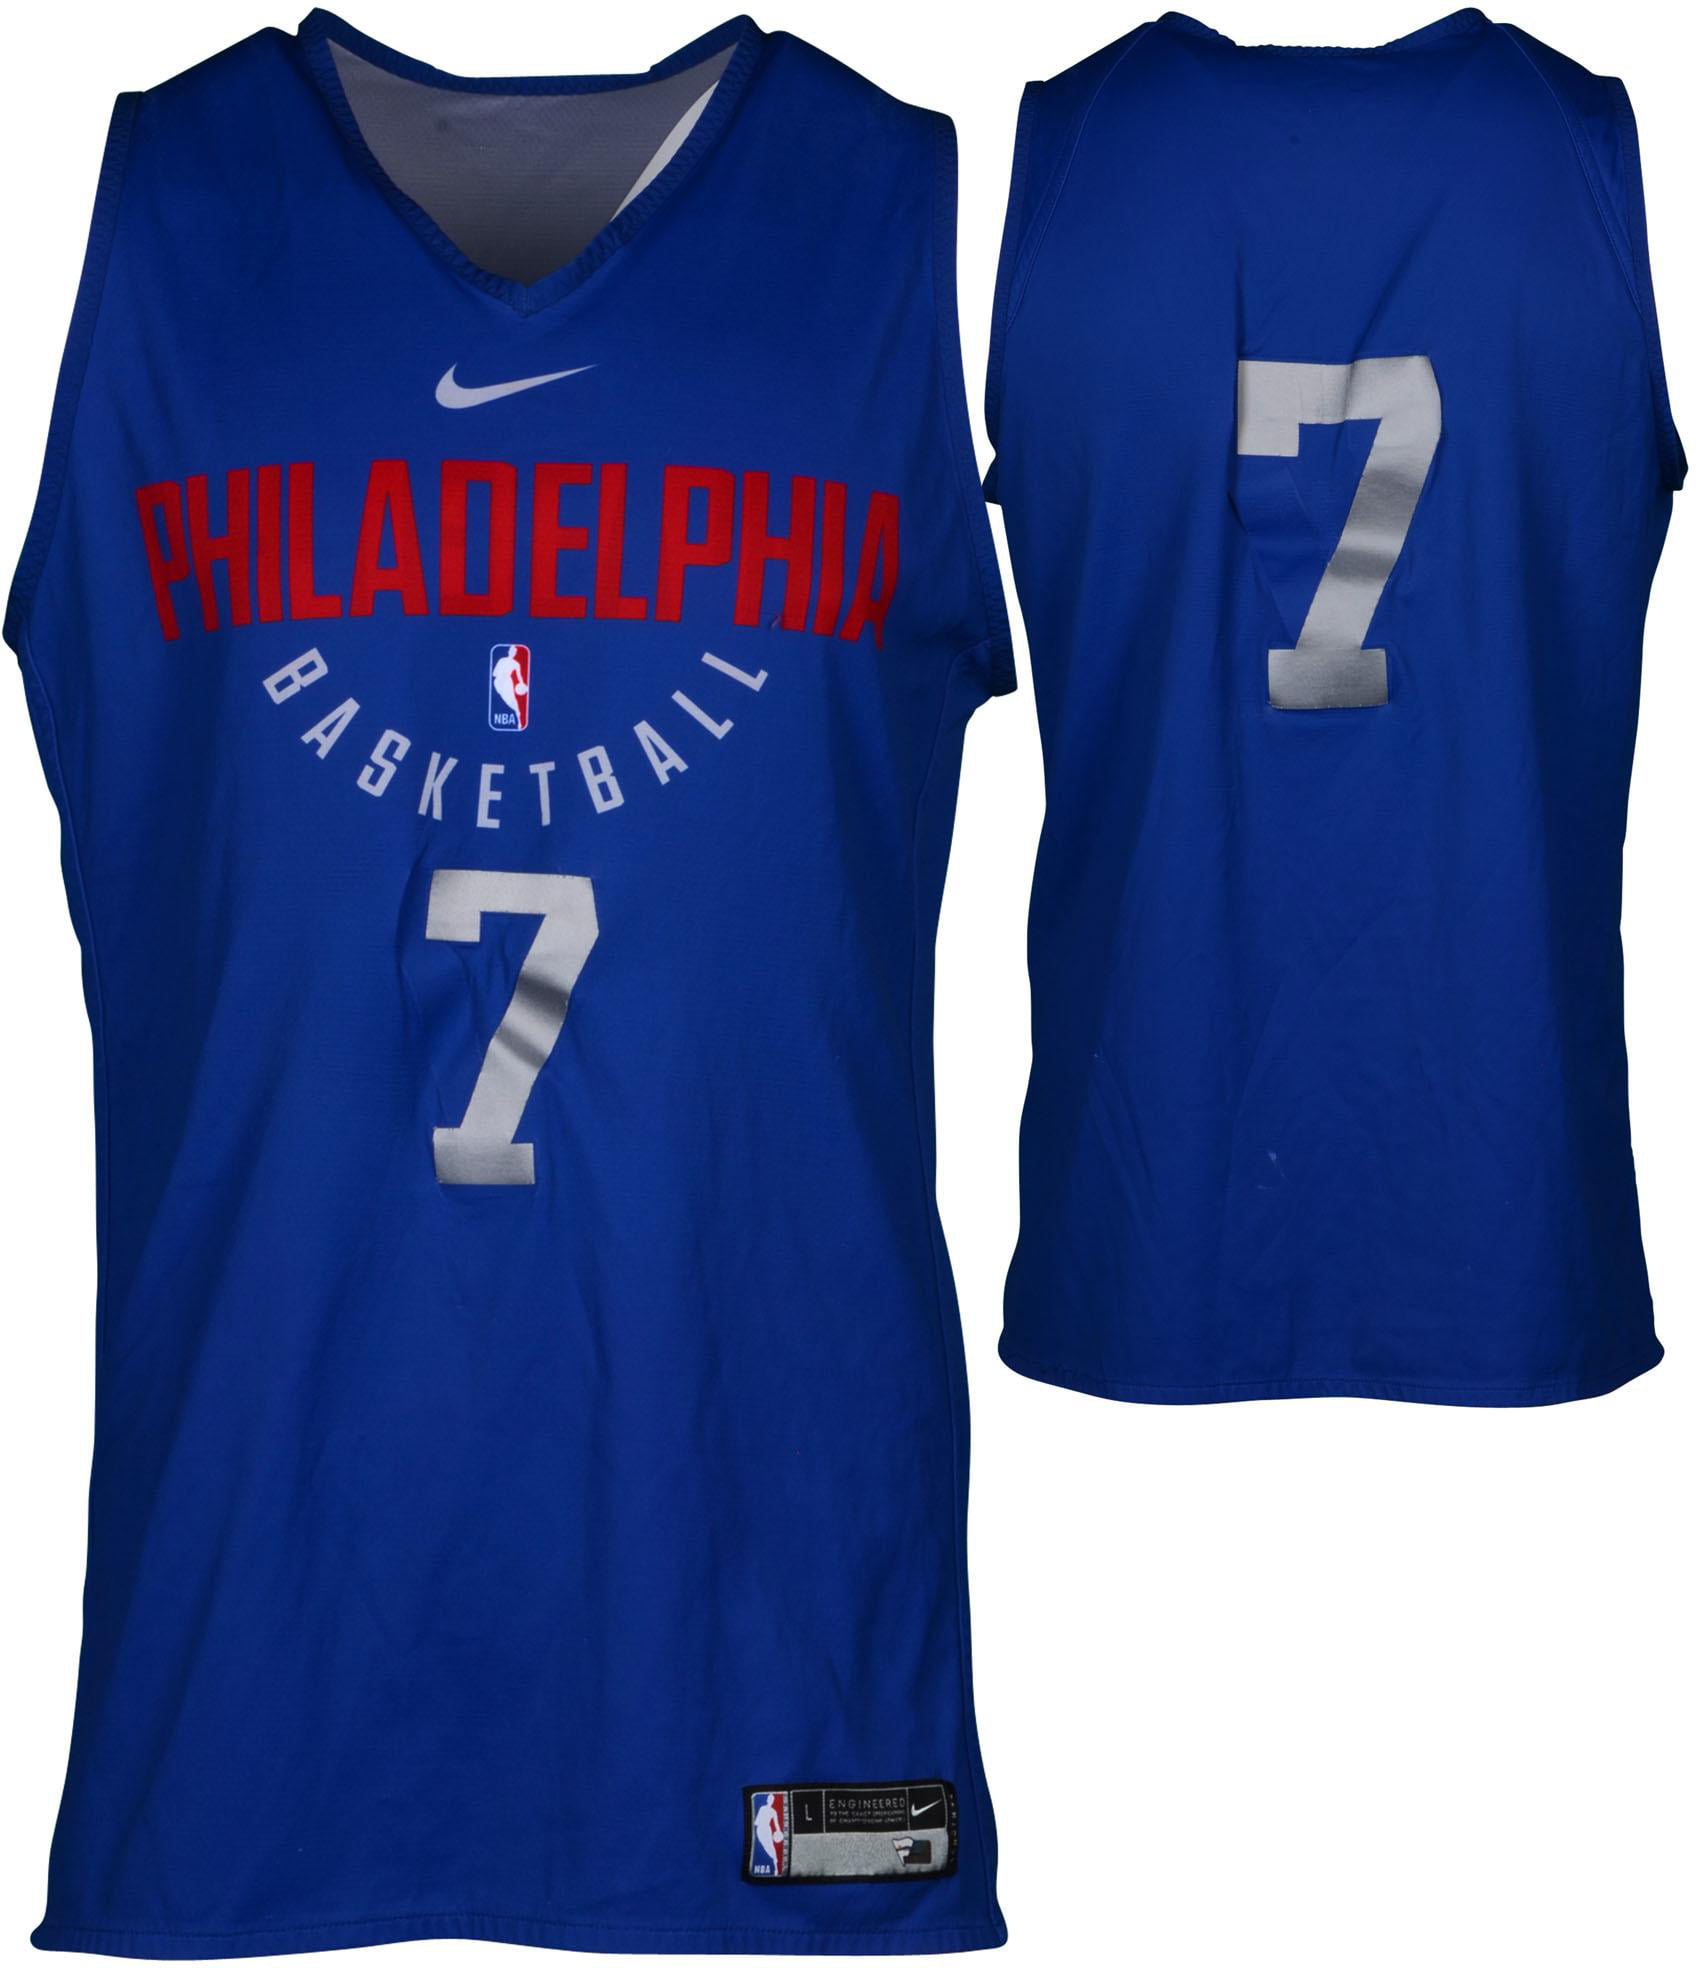 timothe luwawu-cabarrot philadelphia 76ers jerseys